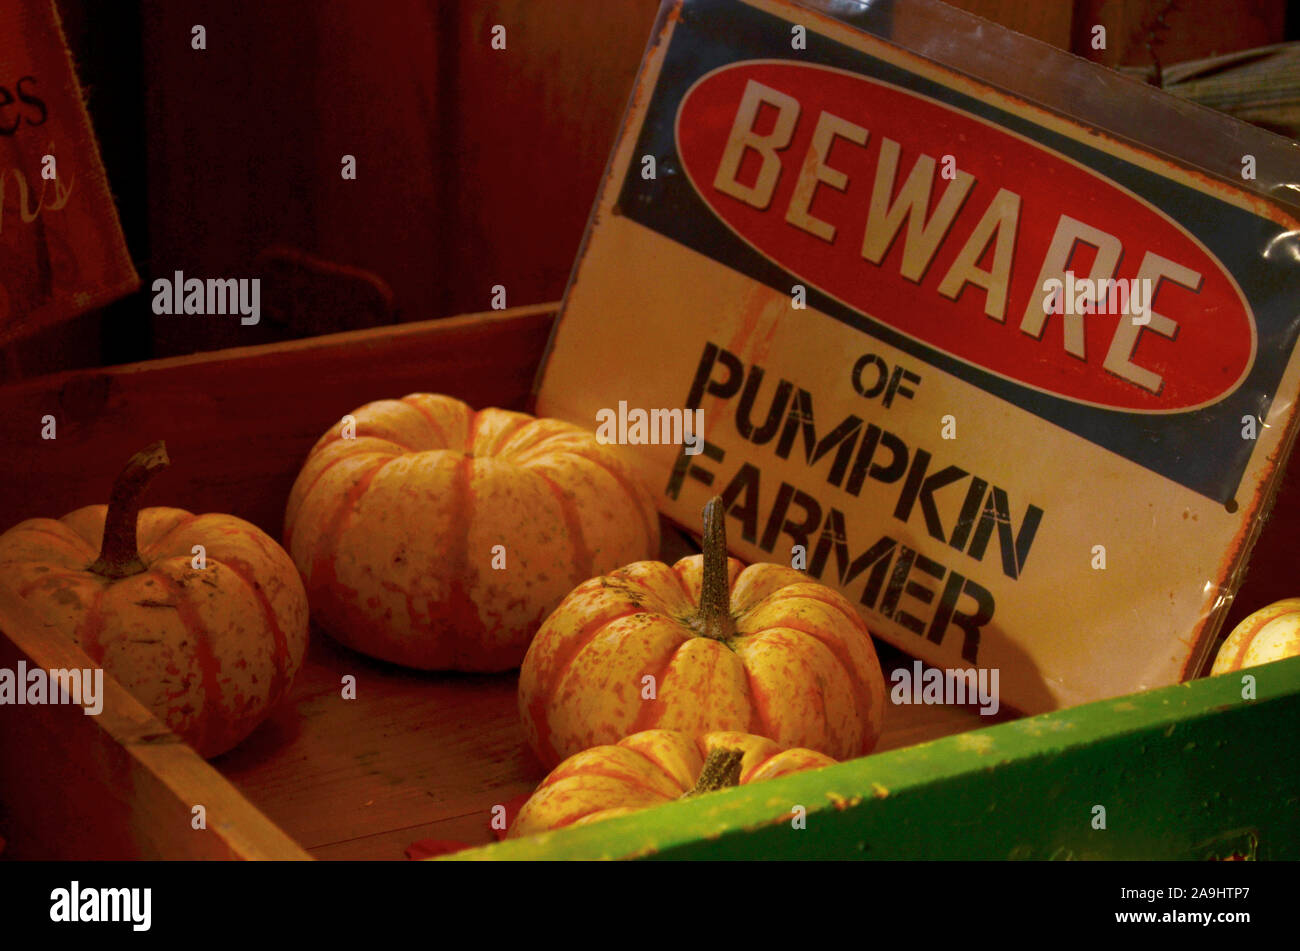 A 'Beware of pumpkin farmer' sign next to 5 small pumpkins Stock Photo